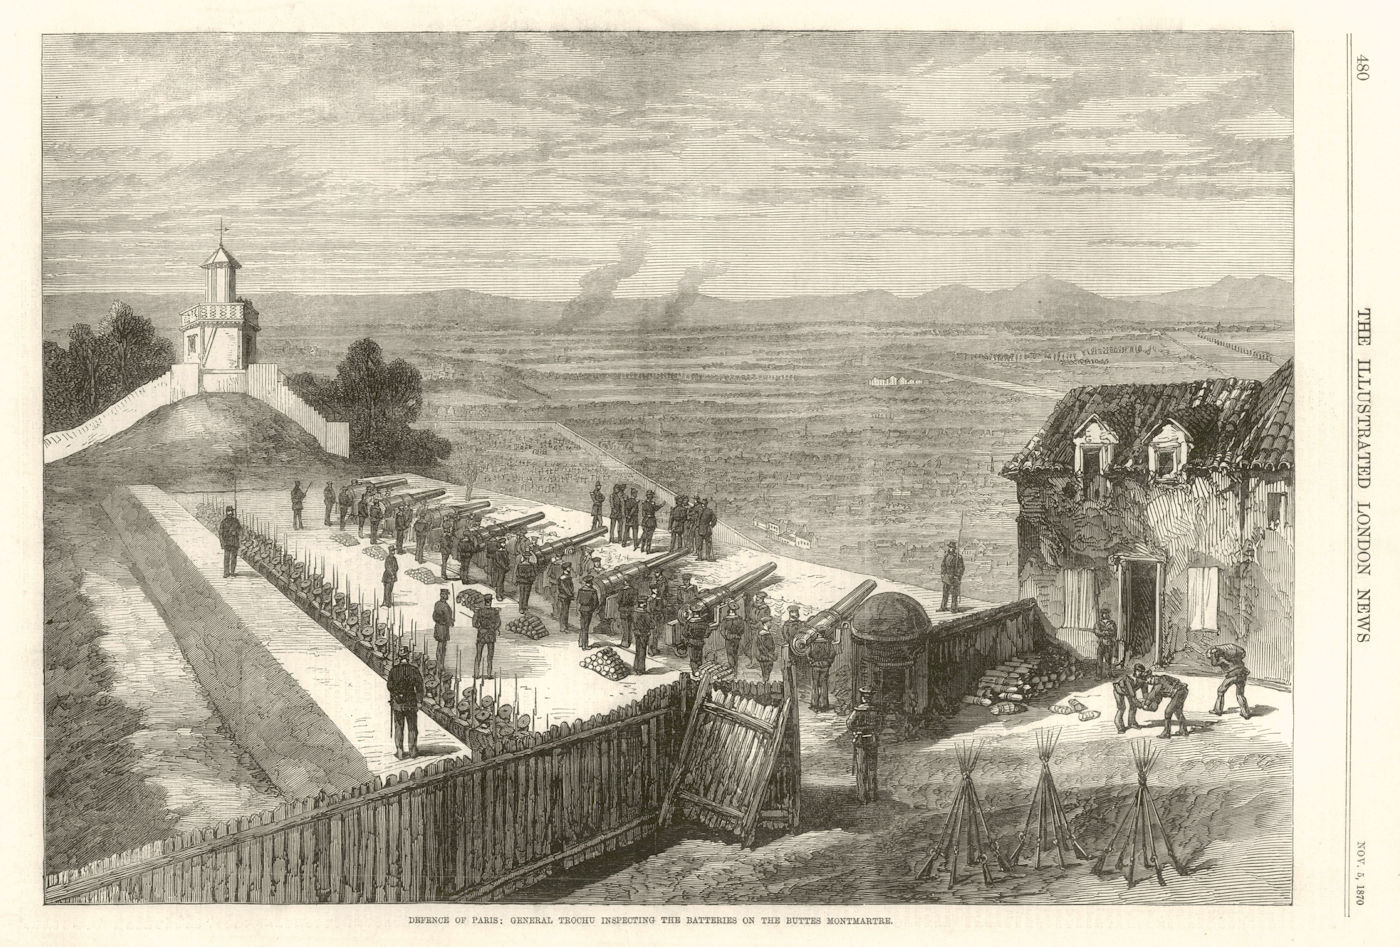 Defence of Paris: General Trochu inspecting the Buttes Montmartre batteries 1870